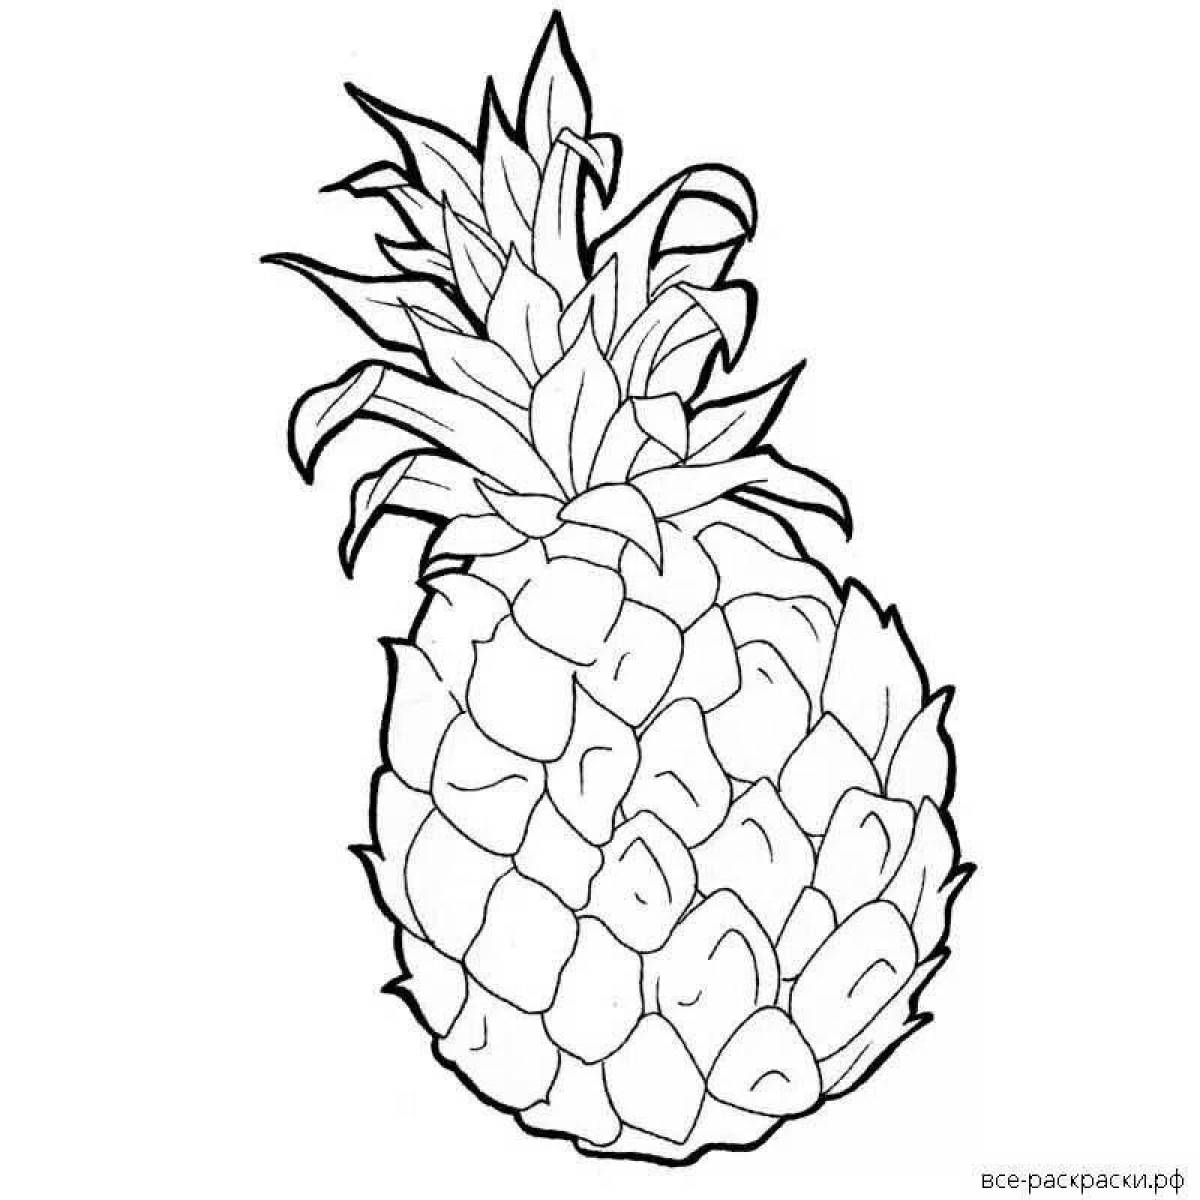 Fun coloring pineapple for kids